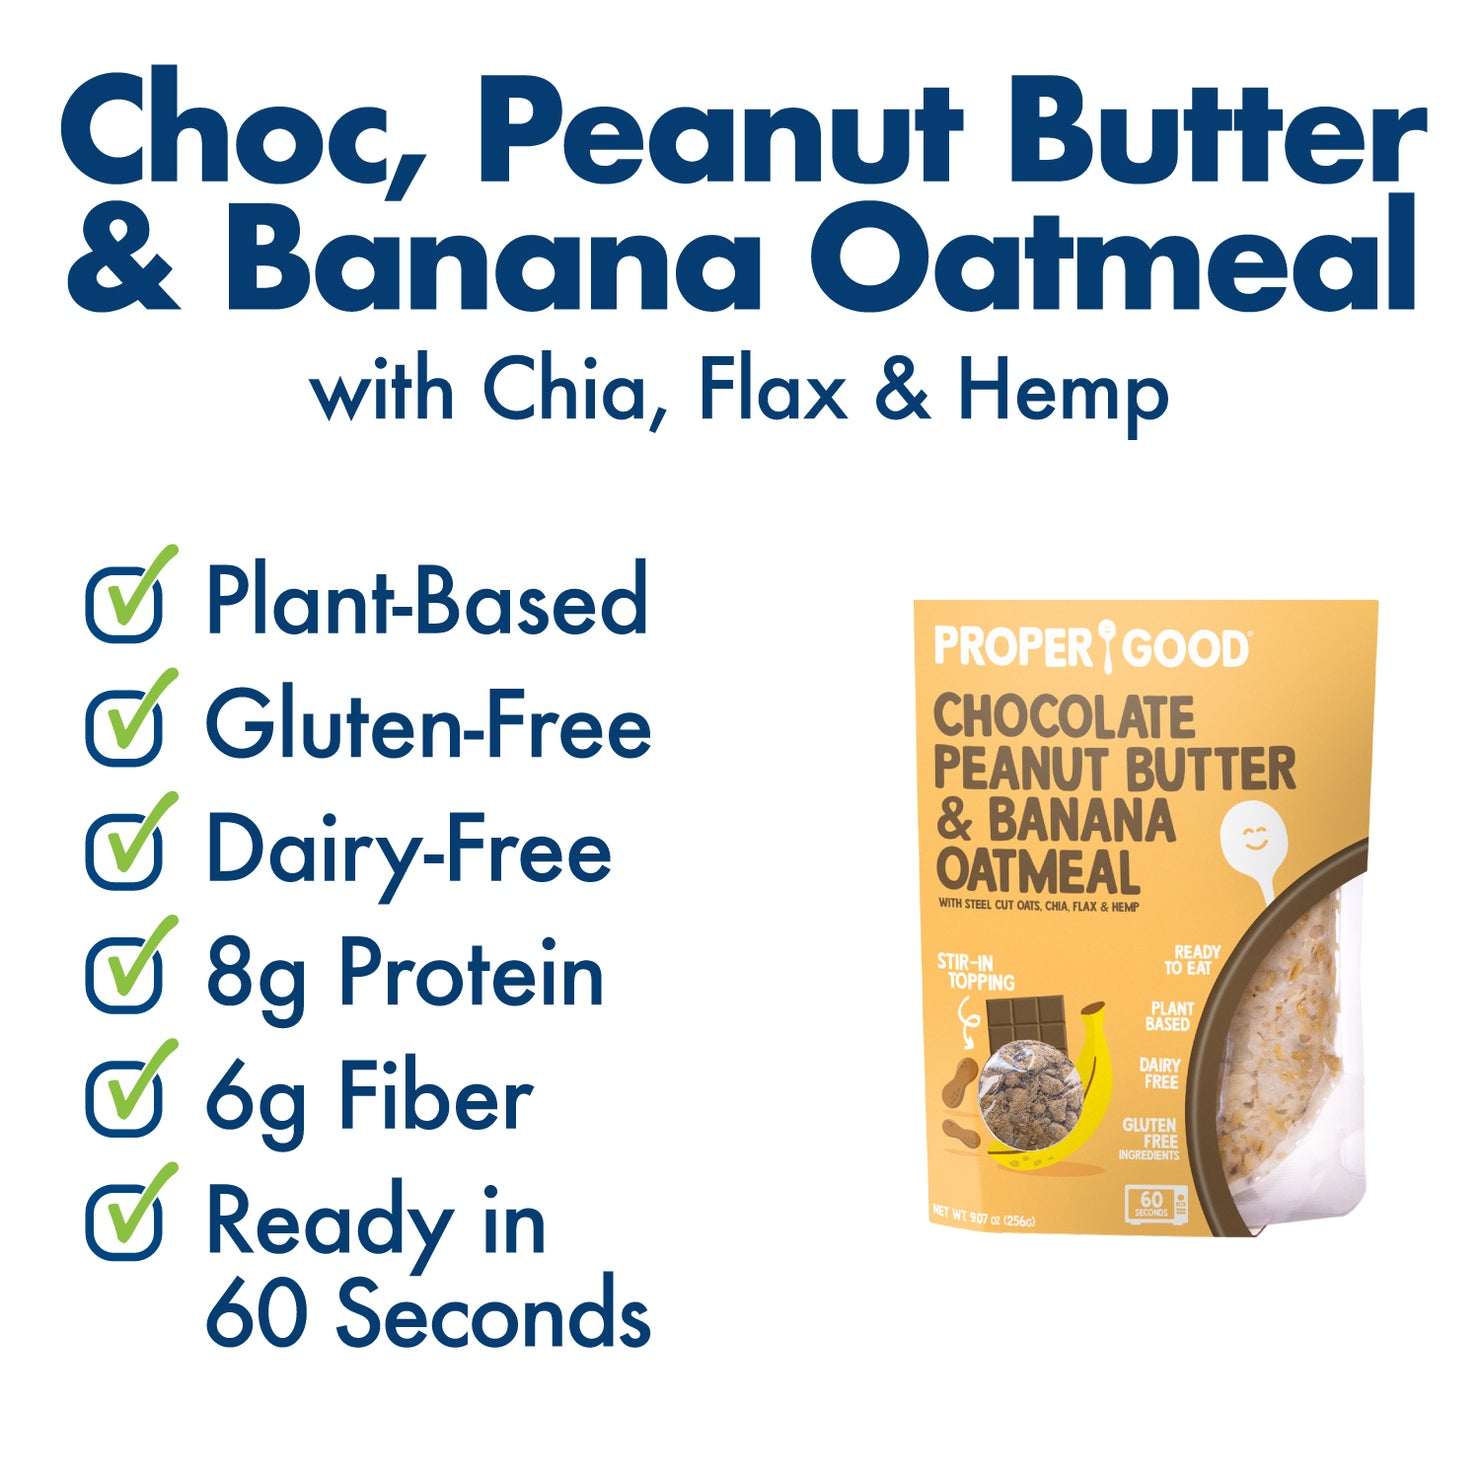 Choc, Peanut Butter & Banana Oatmeal Benefits - Eat Proper Good